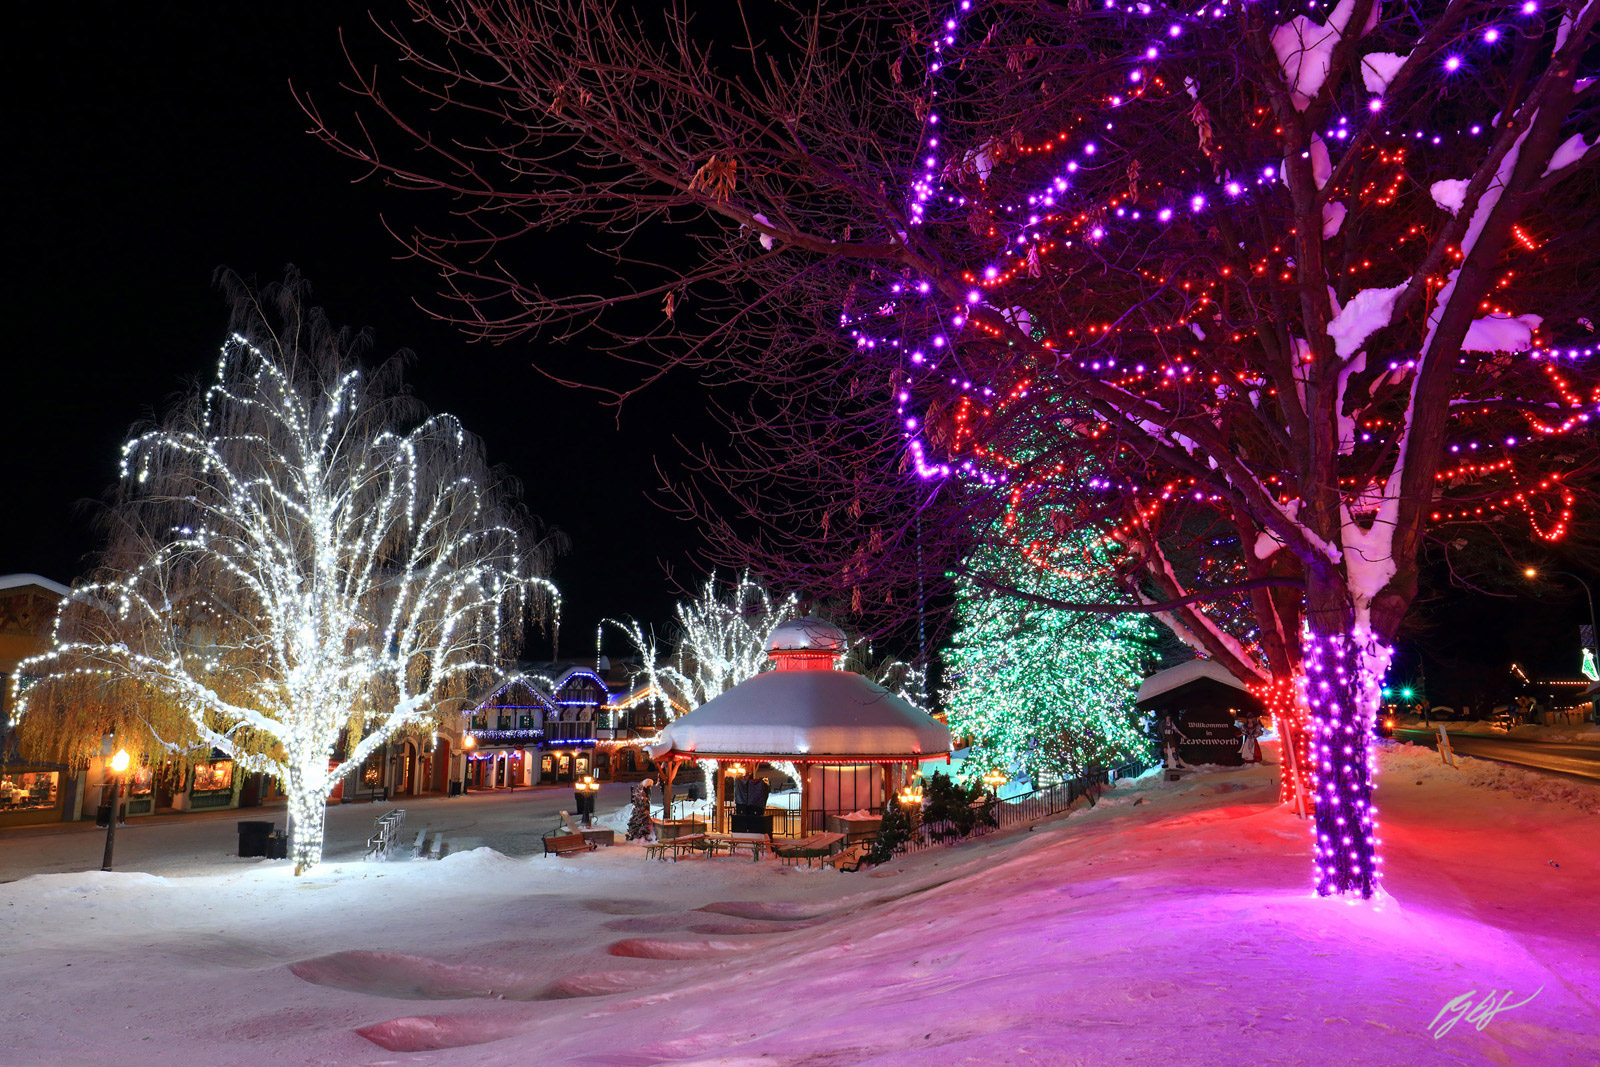 Holiday Lights on Display in Bavarian Village of Leavenworth Washington